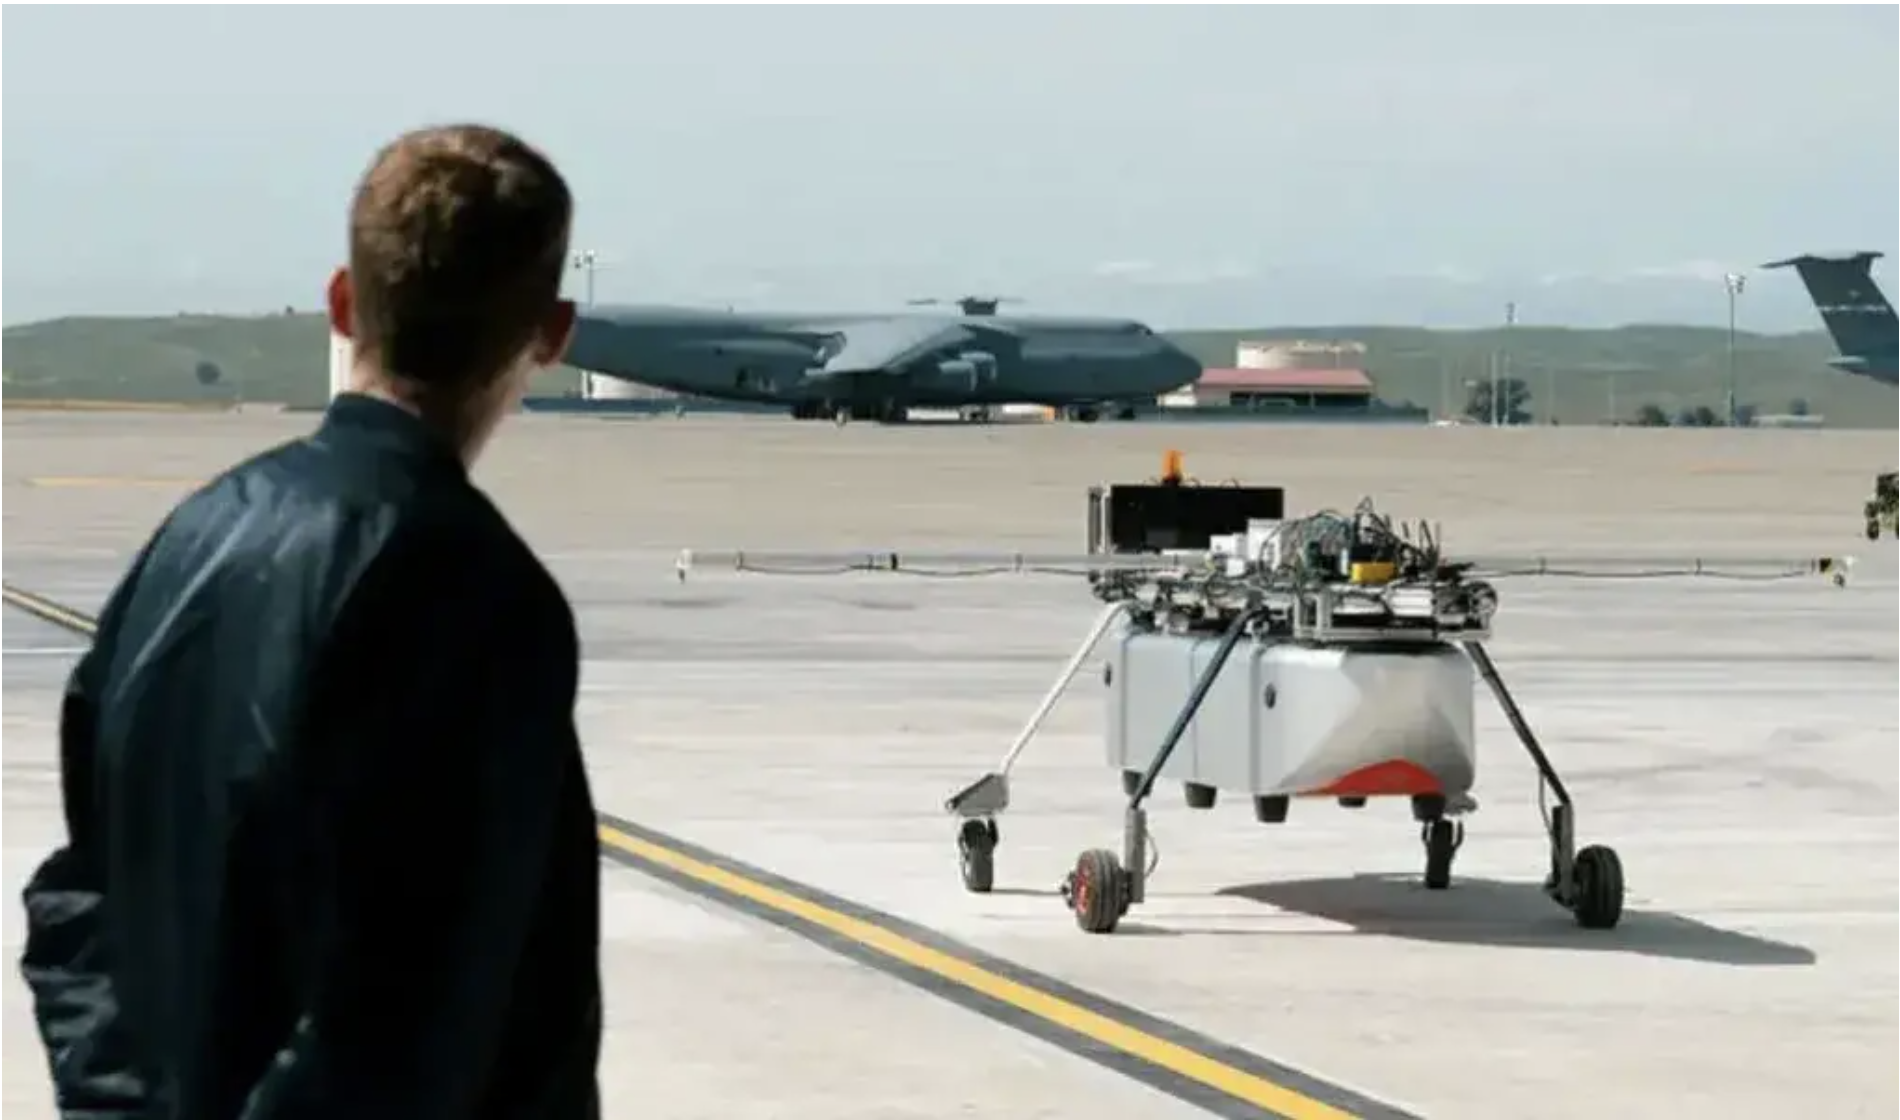 Elroy Air demonstrates autonomous cargo-handling capabilities of Chaparral aircraft